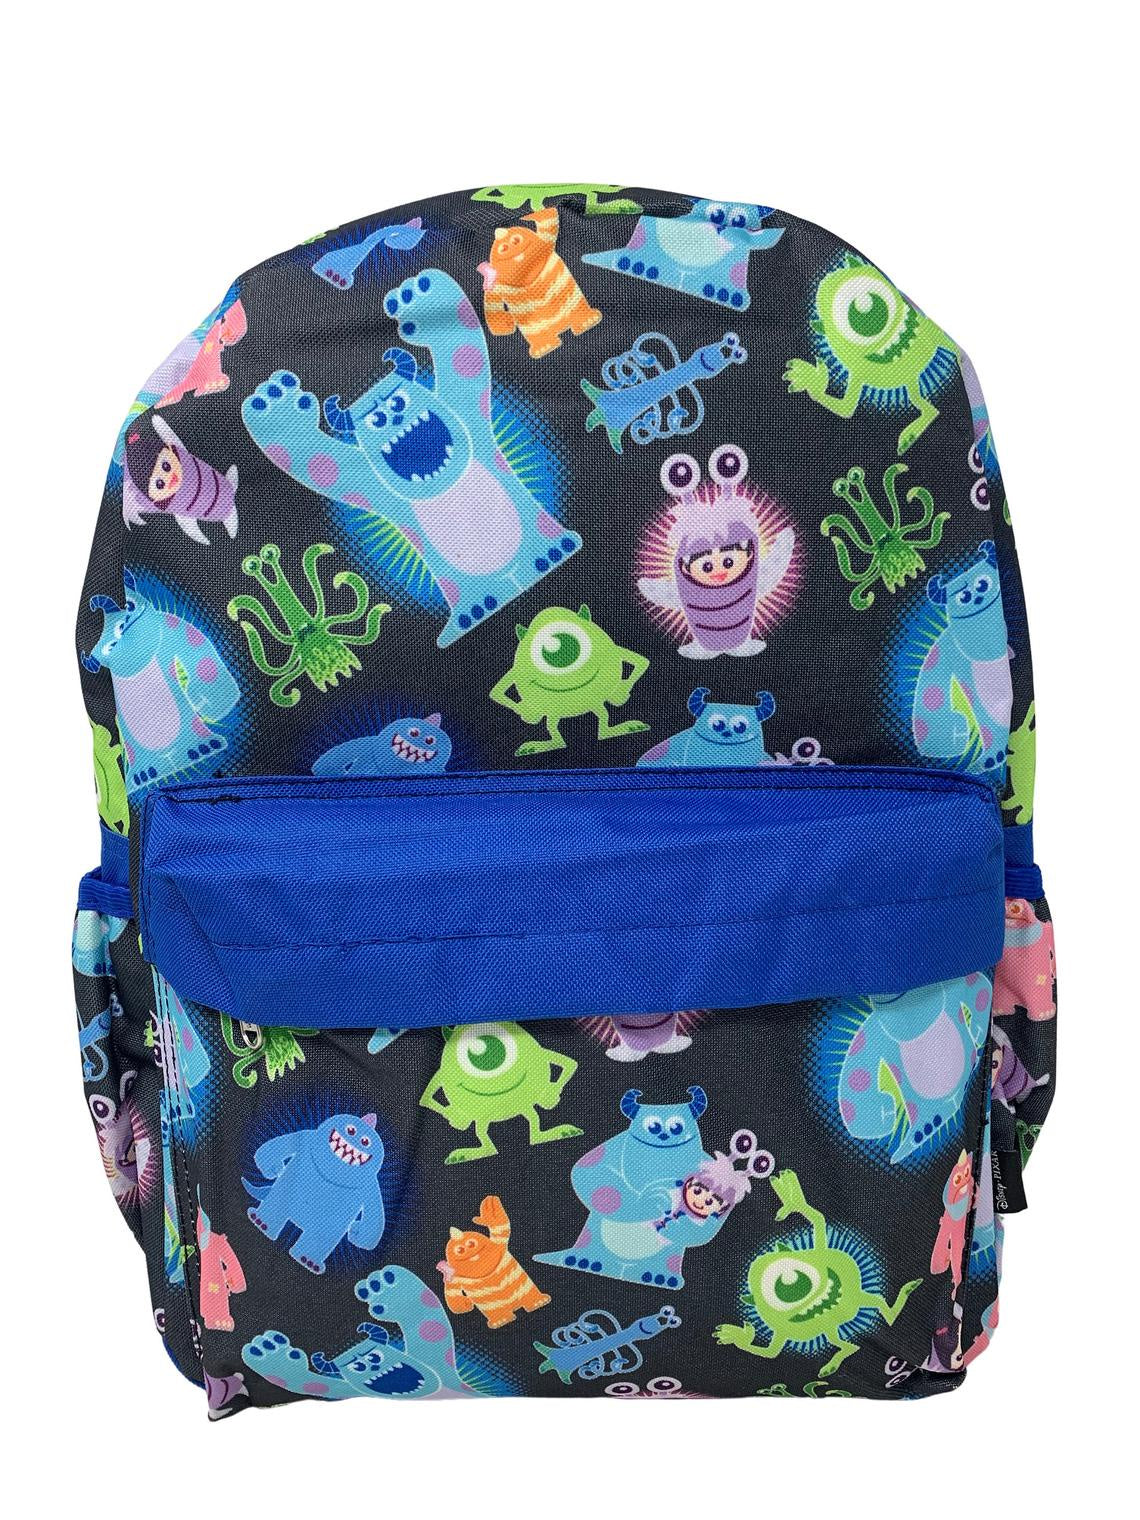 Disney Monsters Inc Allover Print 16" Large School Backpack